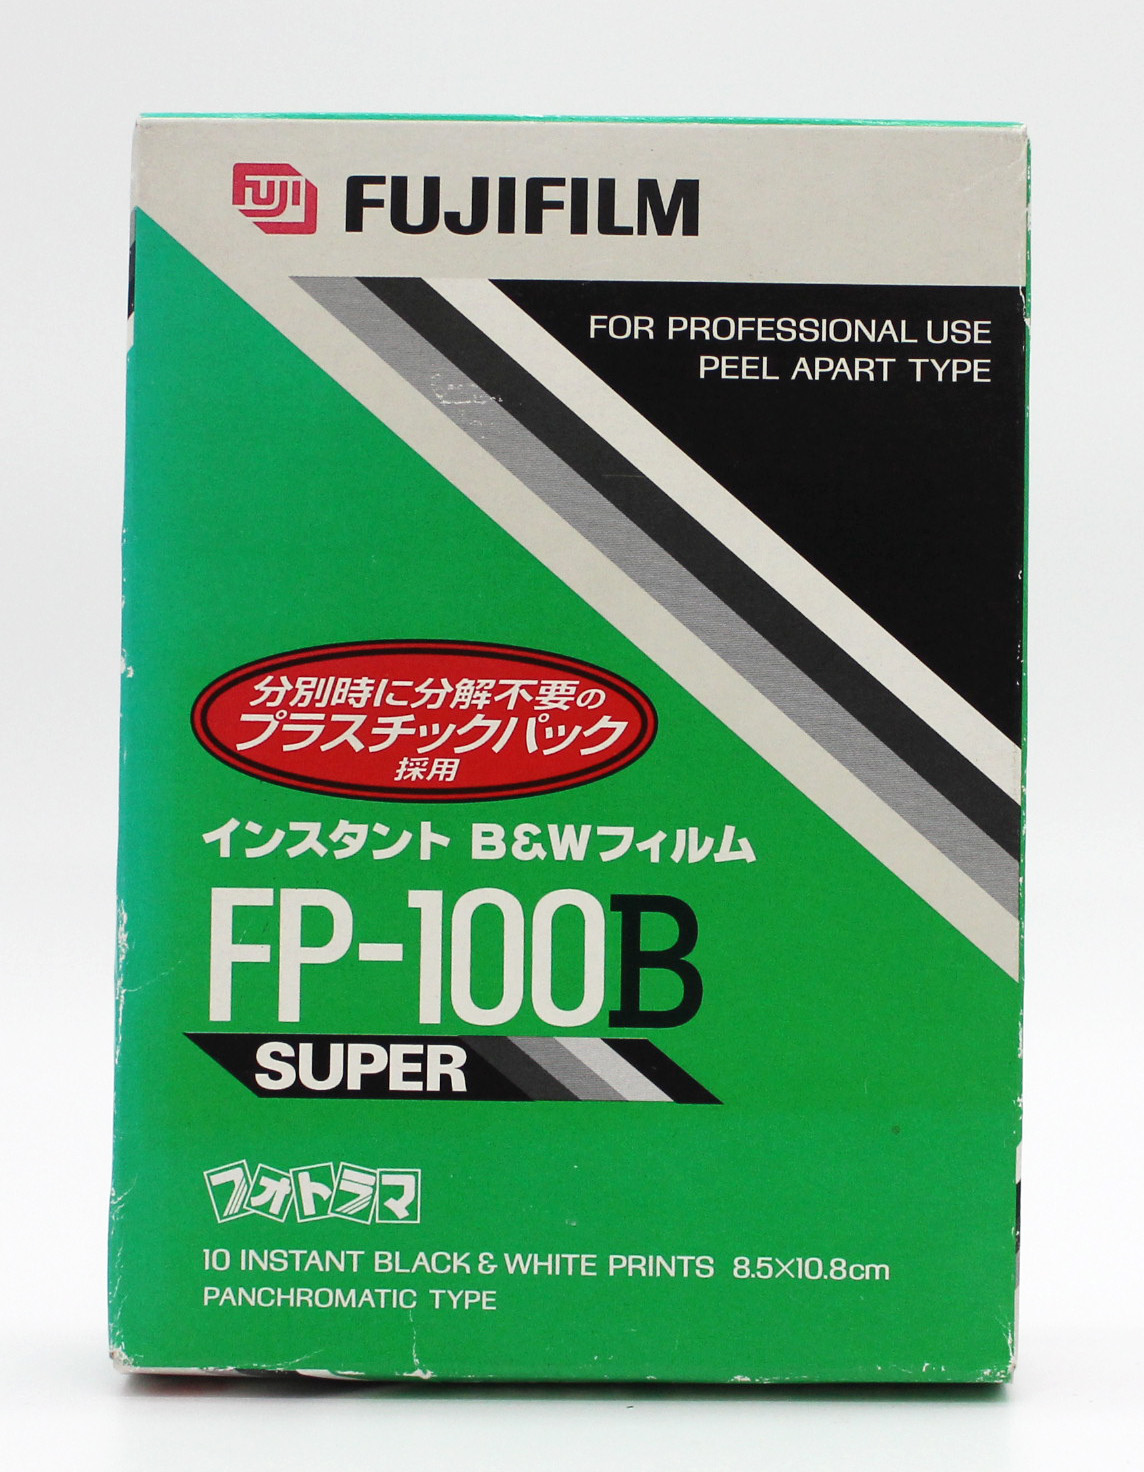 [New] Fujifilm FP-100B Instant Black & White Film (Expired 09/2004) from Japan